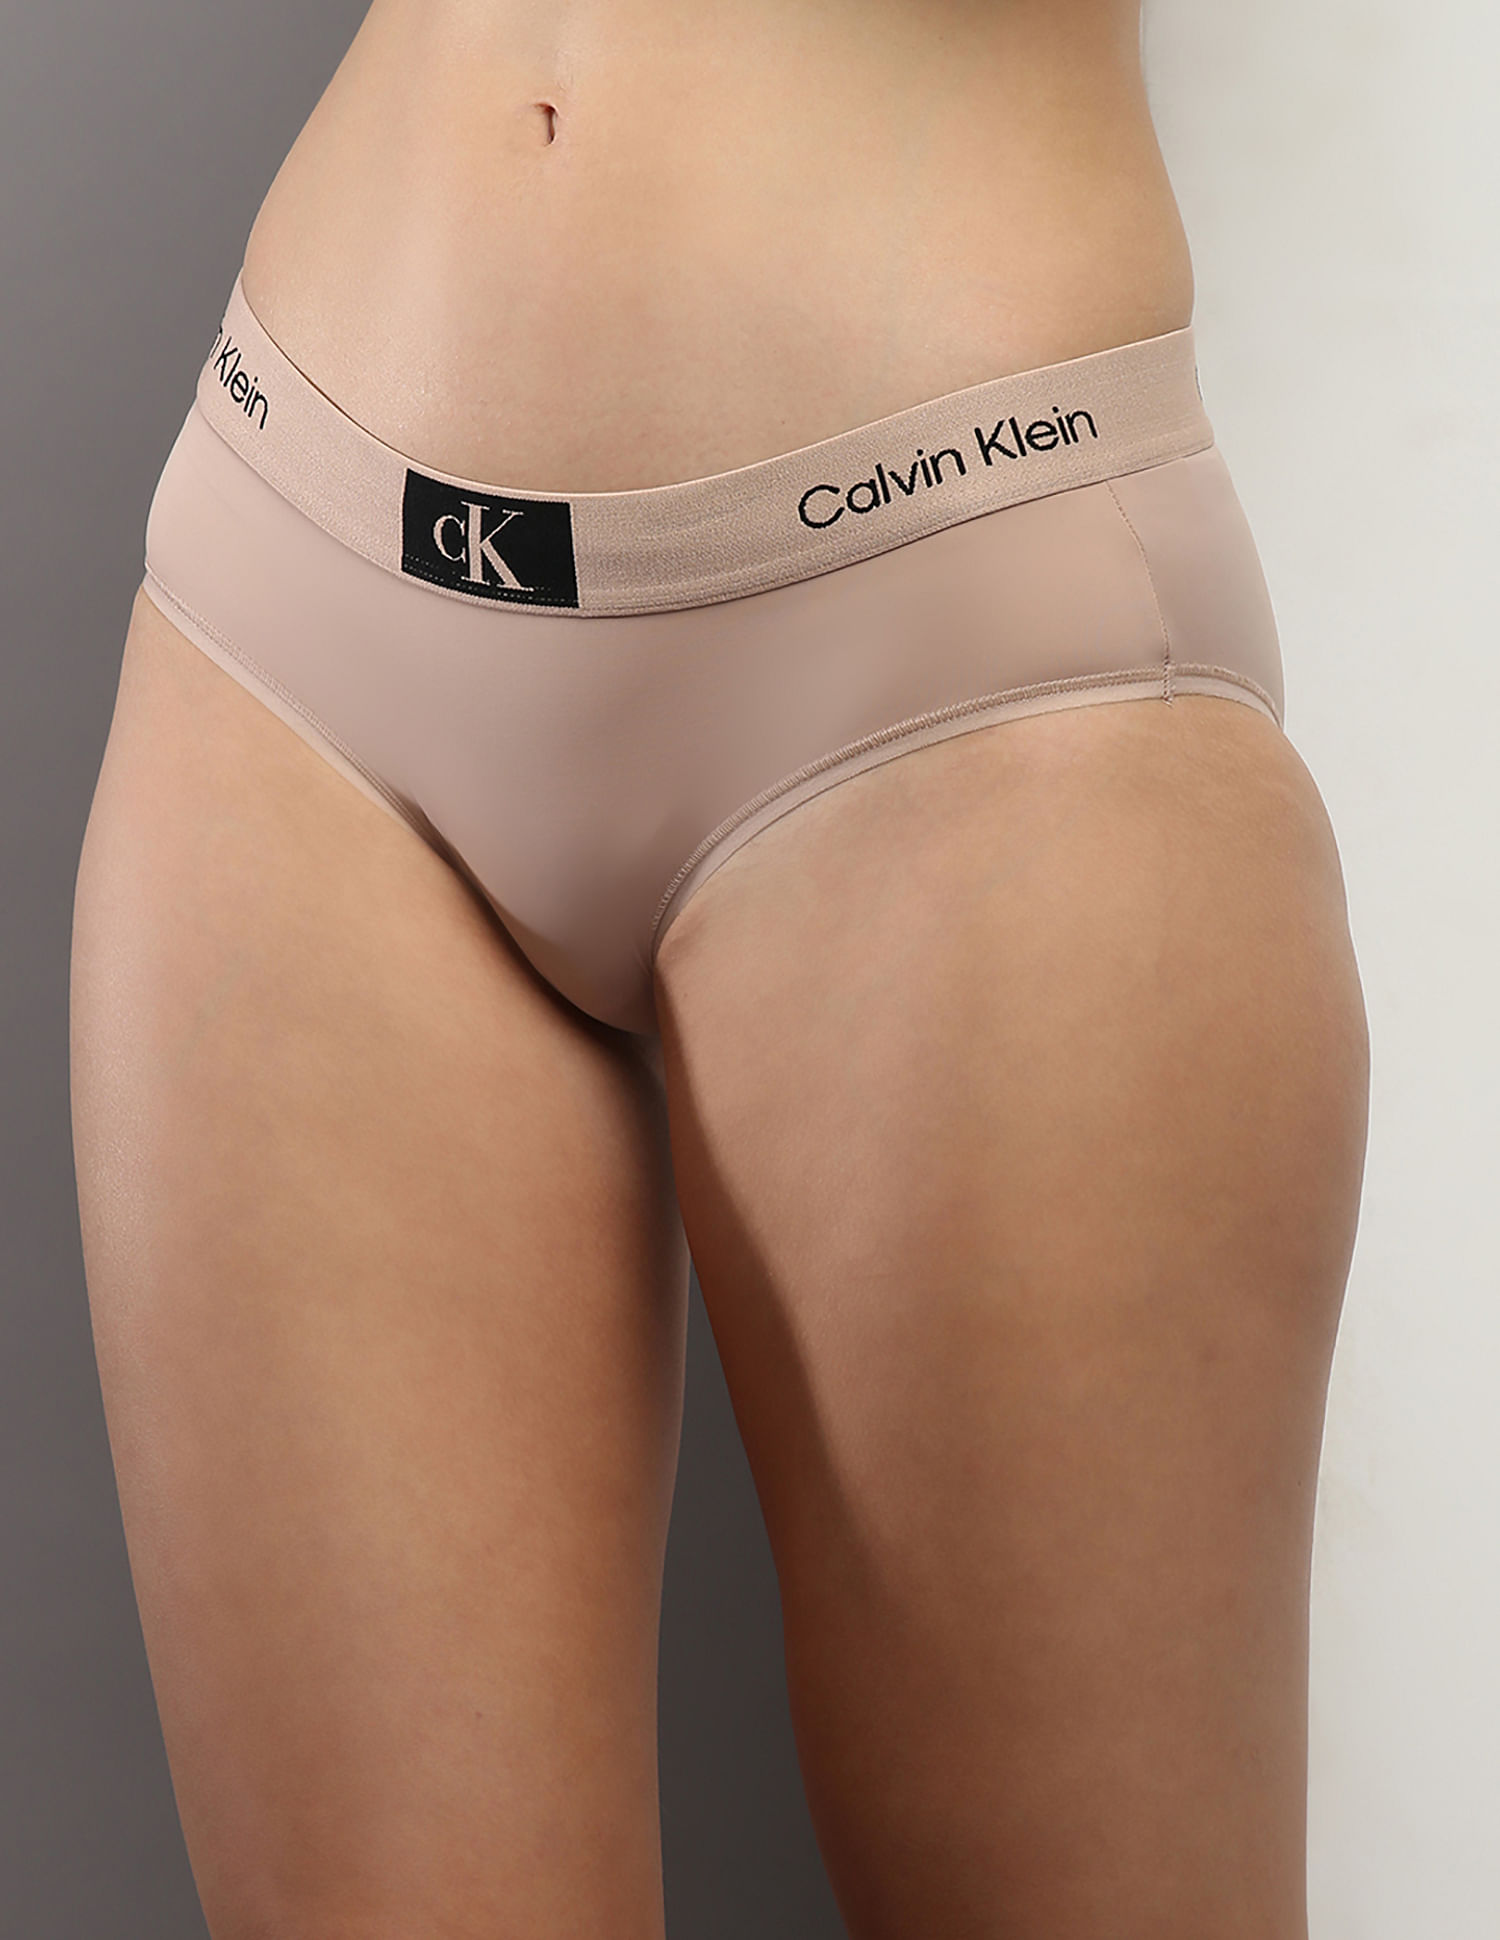 NNNOW.com Sale - Calvin klein women panties - Shop Online at